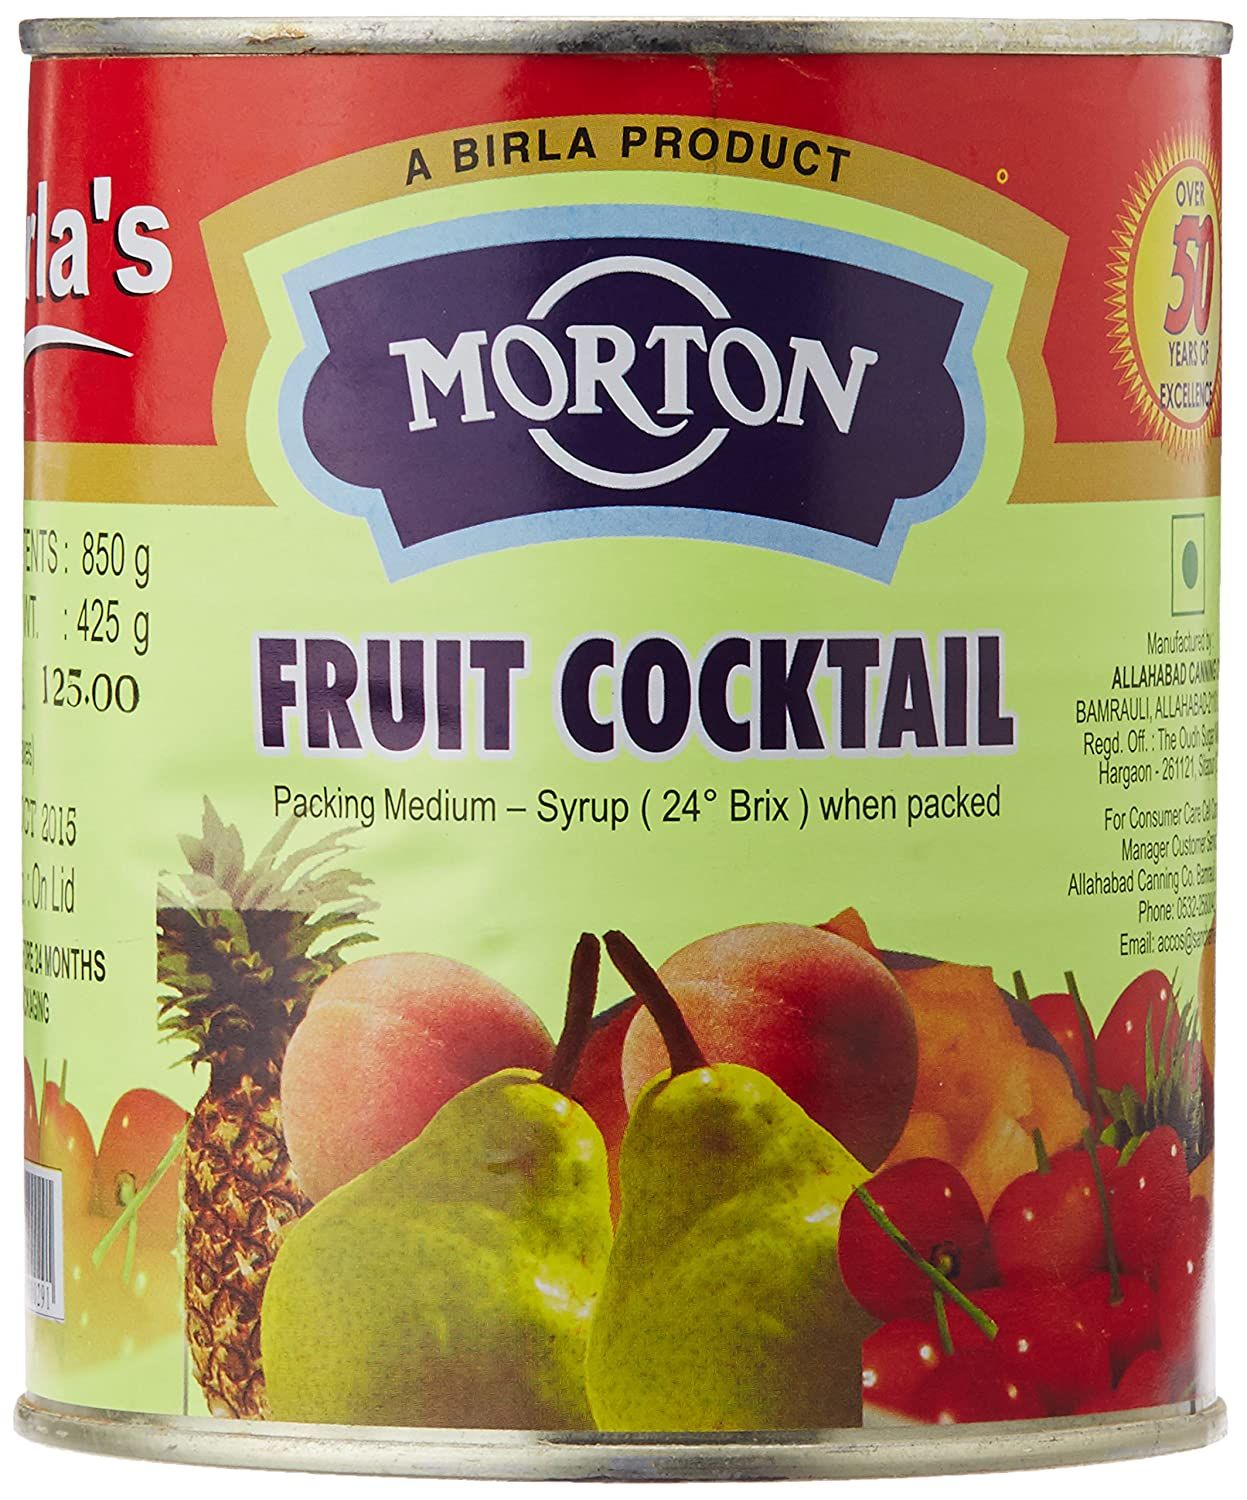 Morton Fruit Cocktail Image